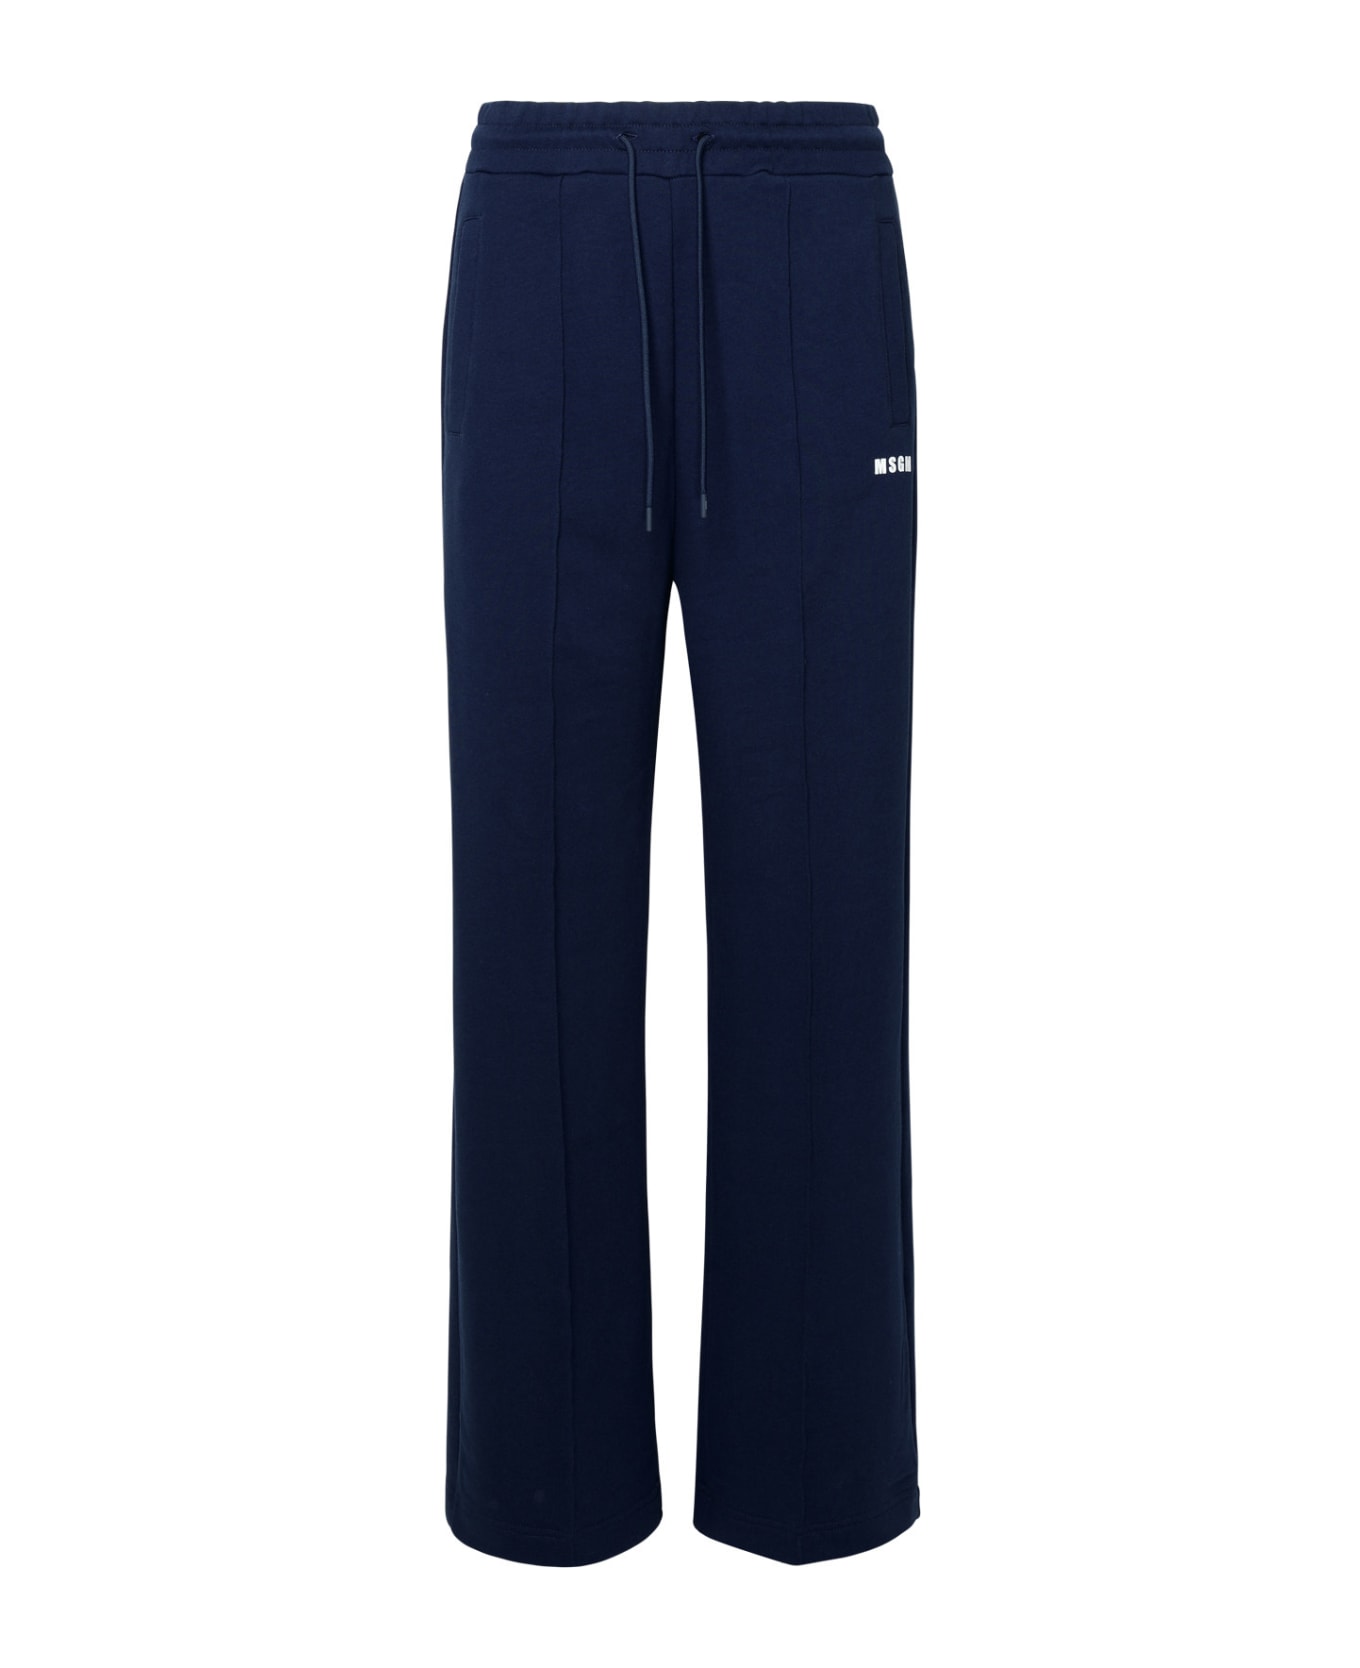 MSGM Blue Cotton Pants - Navy ボトムス